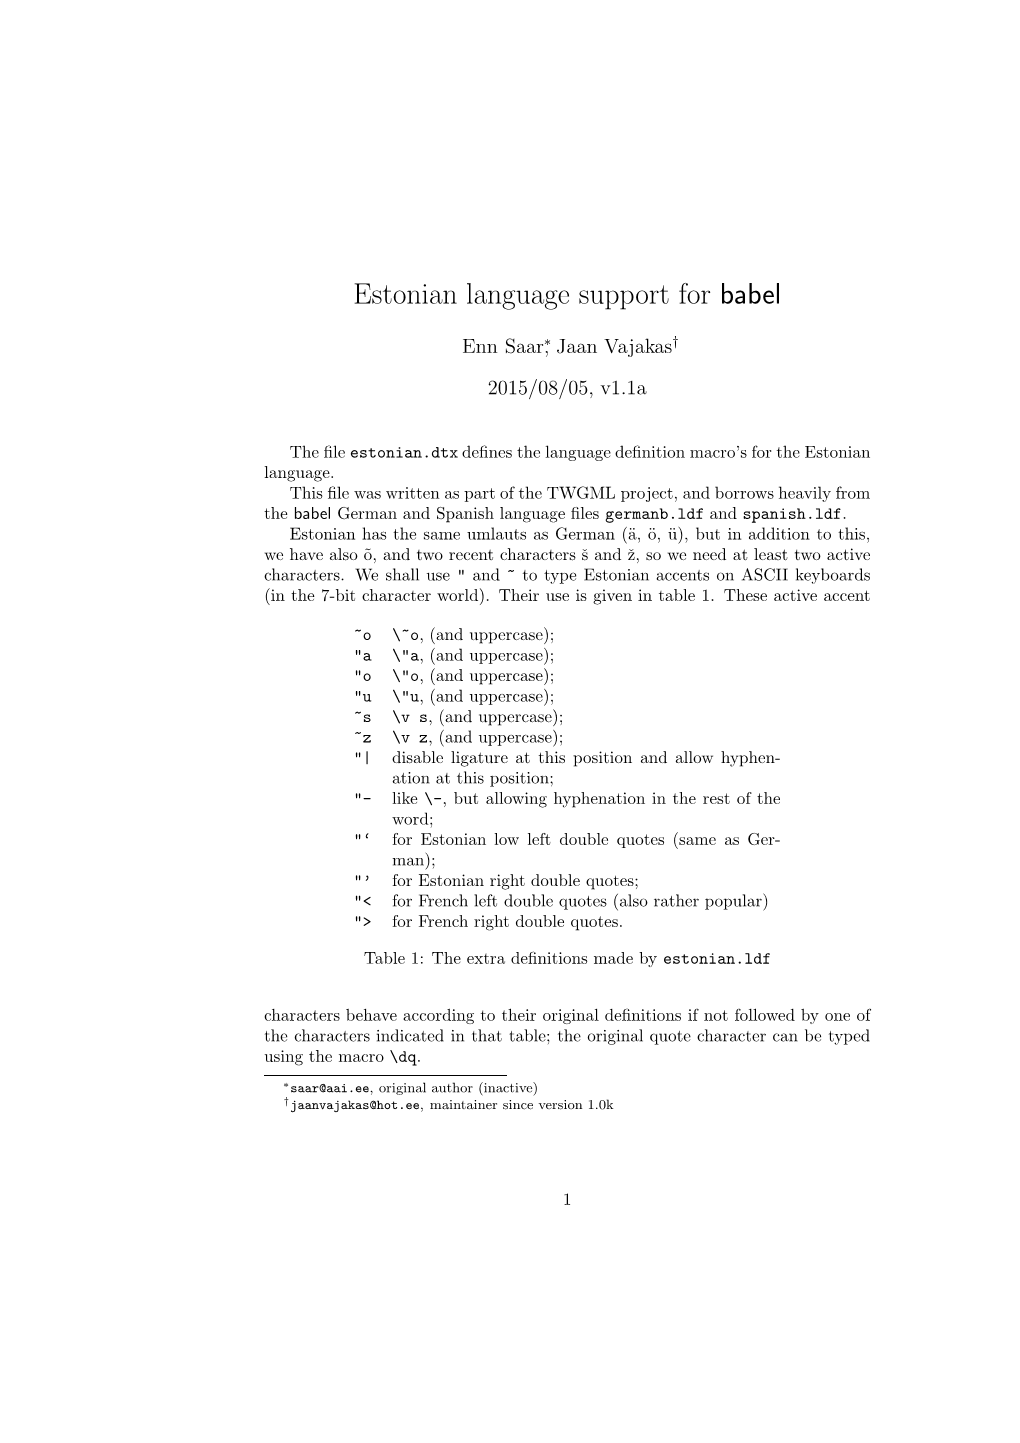 Estonian Language Support for Babel